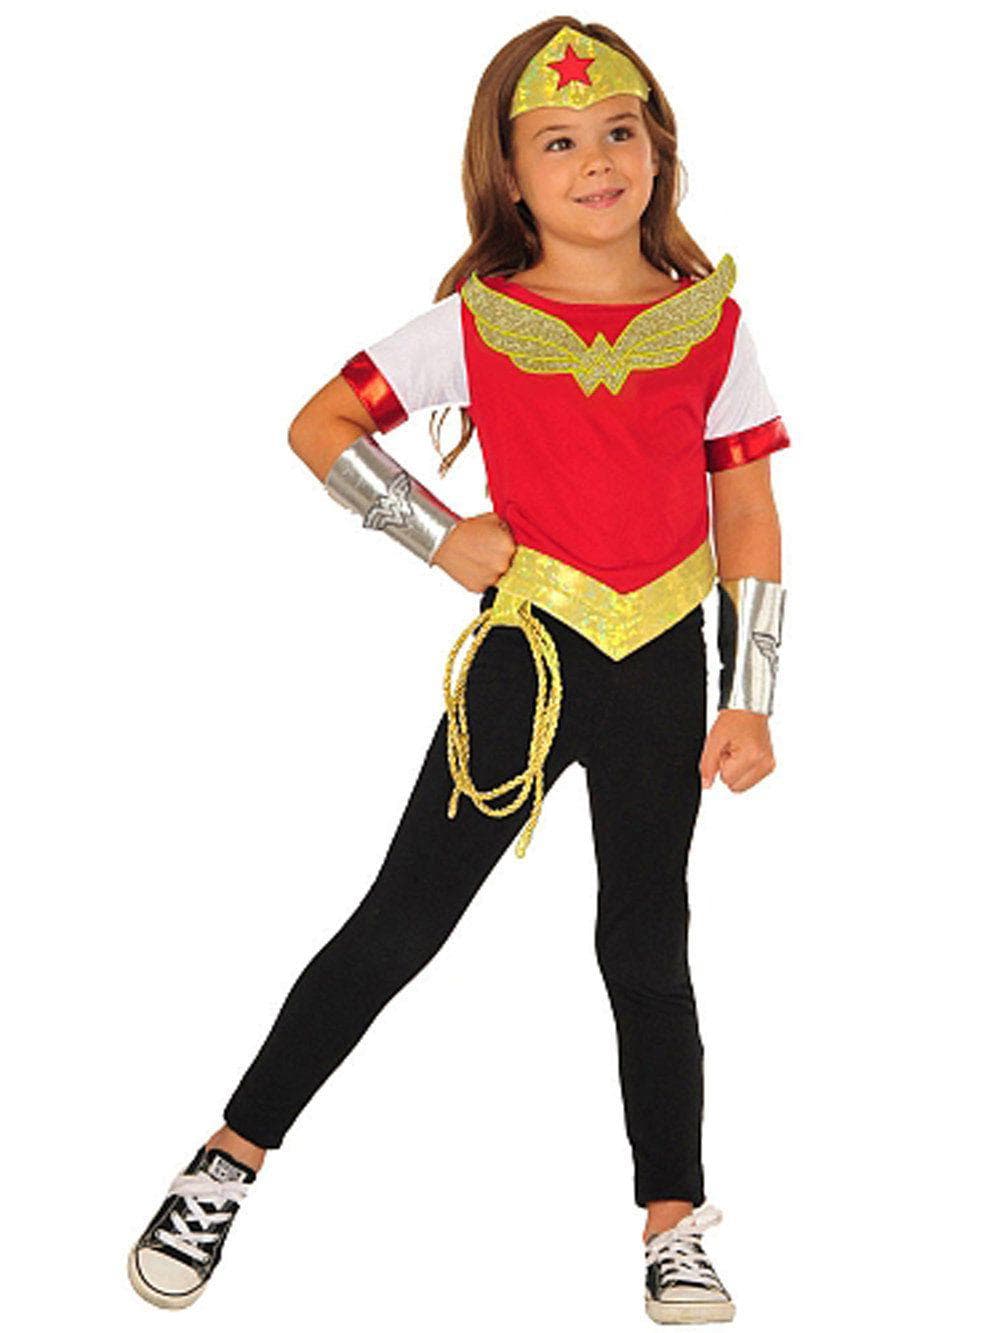 Girls' DC Superhero Girls Wonder Woman Shirt and Accessory Set - costumes.com